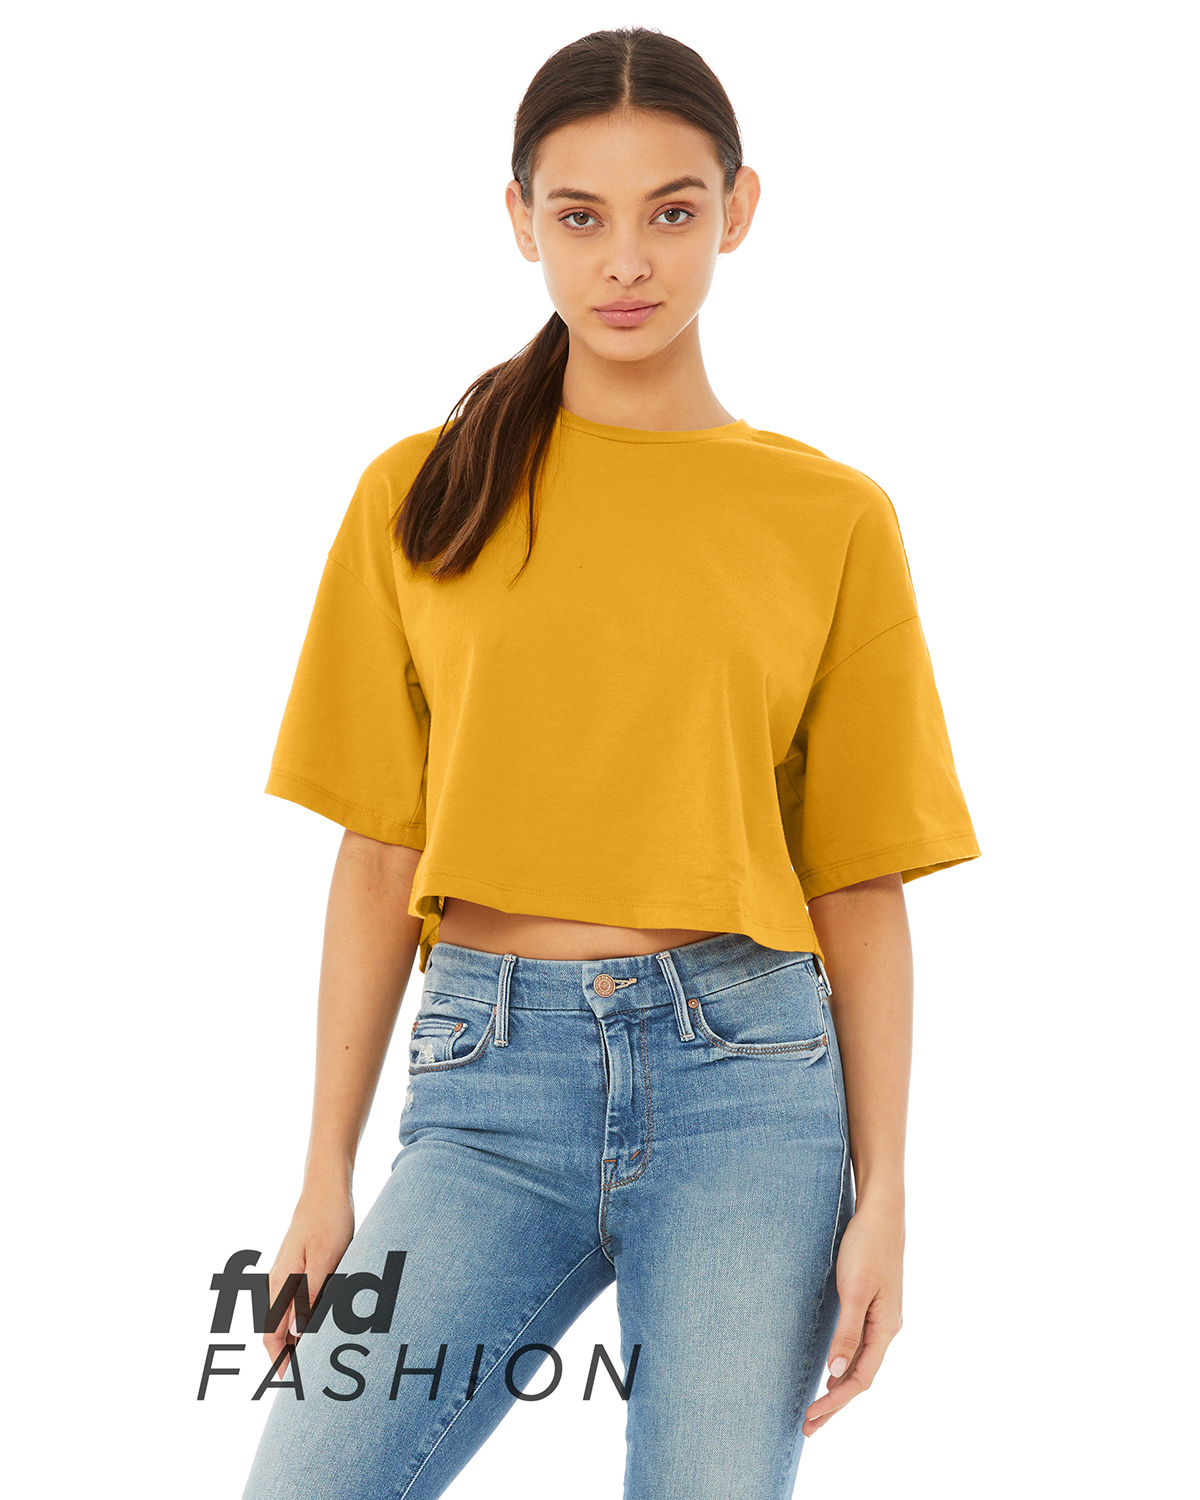 Bella + Canvas 6482 FWD Fashion Ladies' Jersey Cropped T-Shirt - Mustard - S